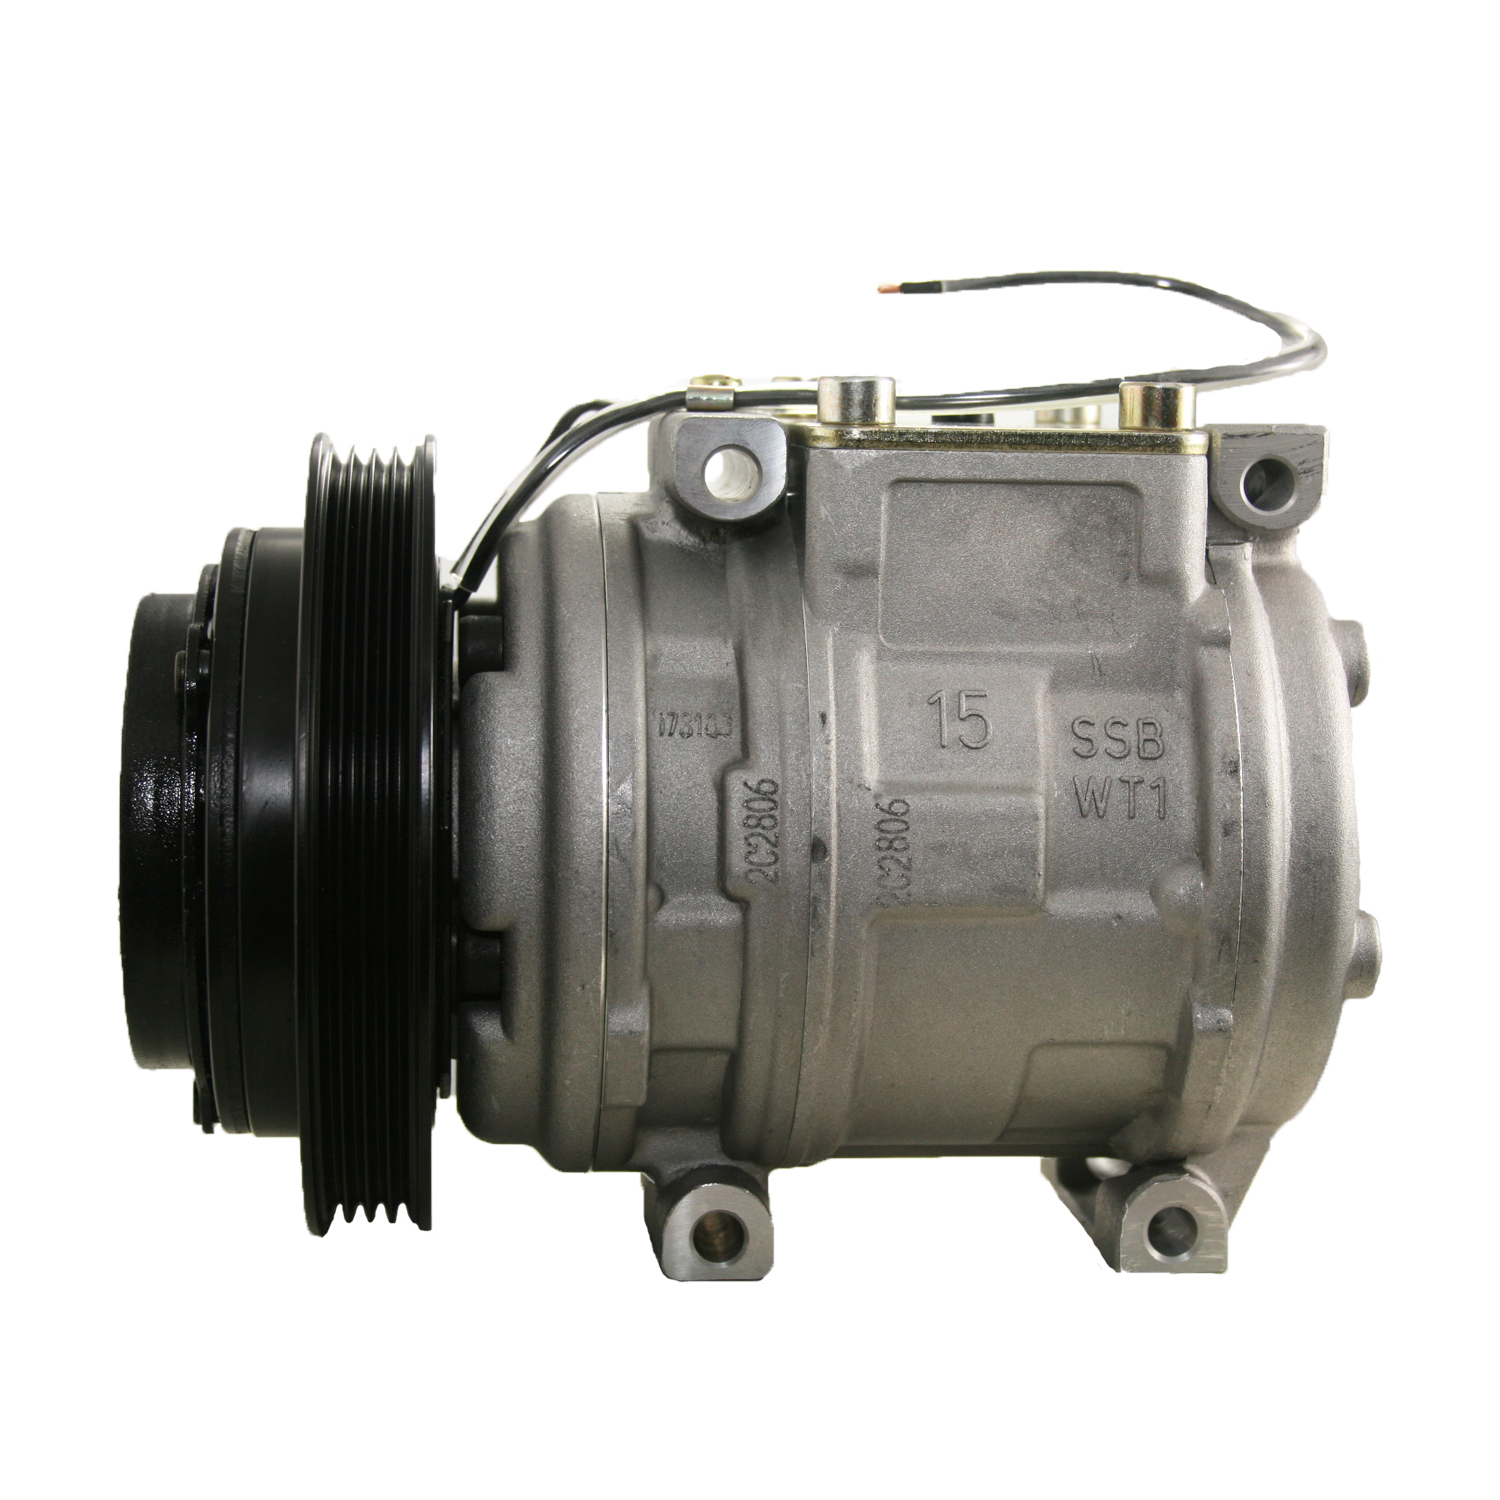 TCW Compressor 31210.402NEW New Product Image field_60b6a13a6e67c